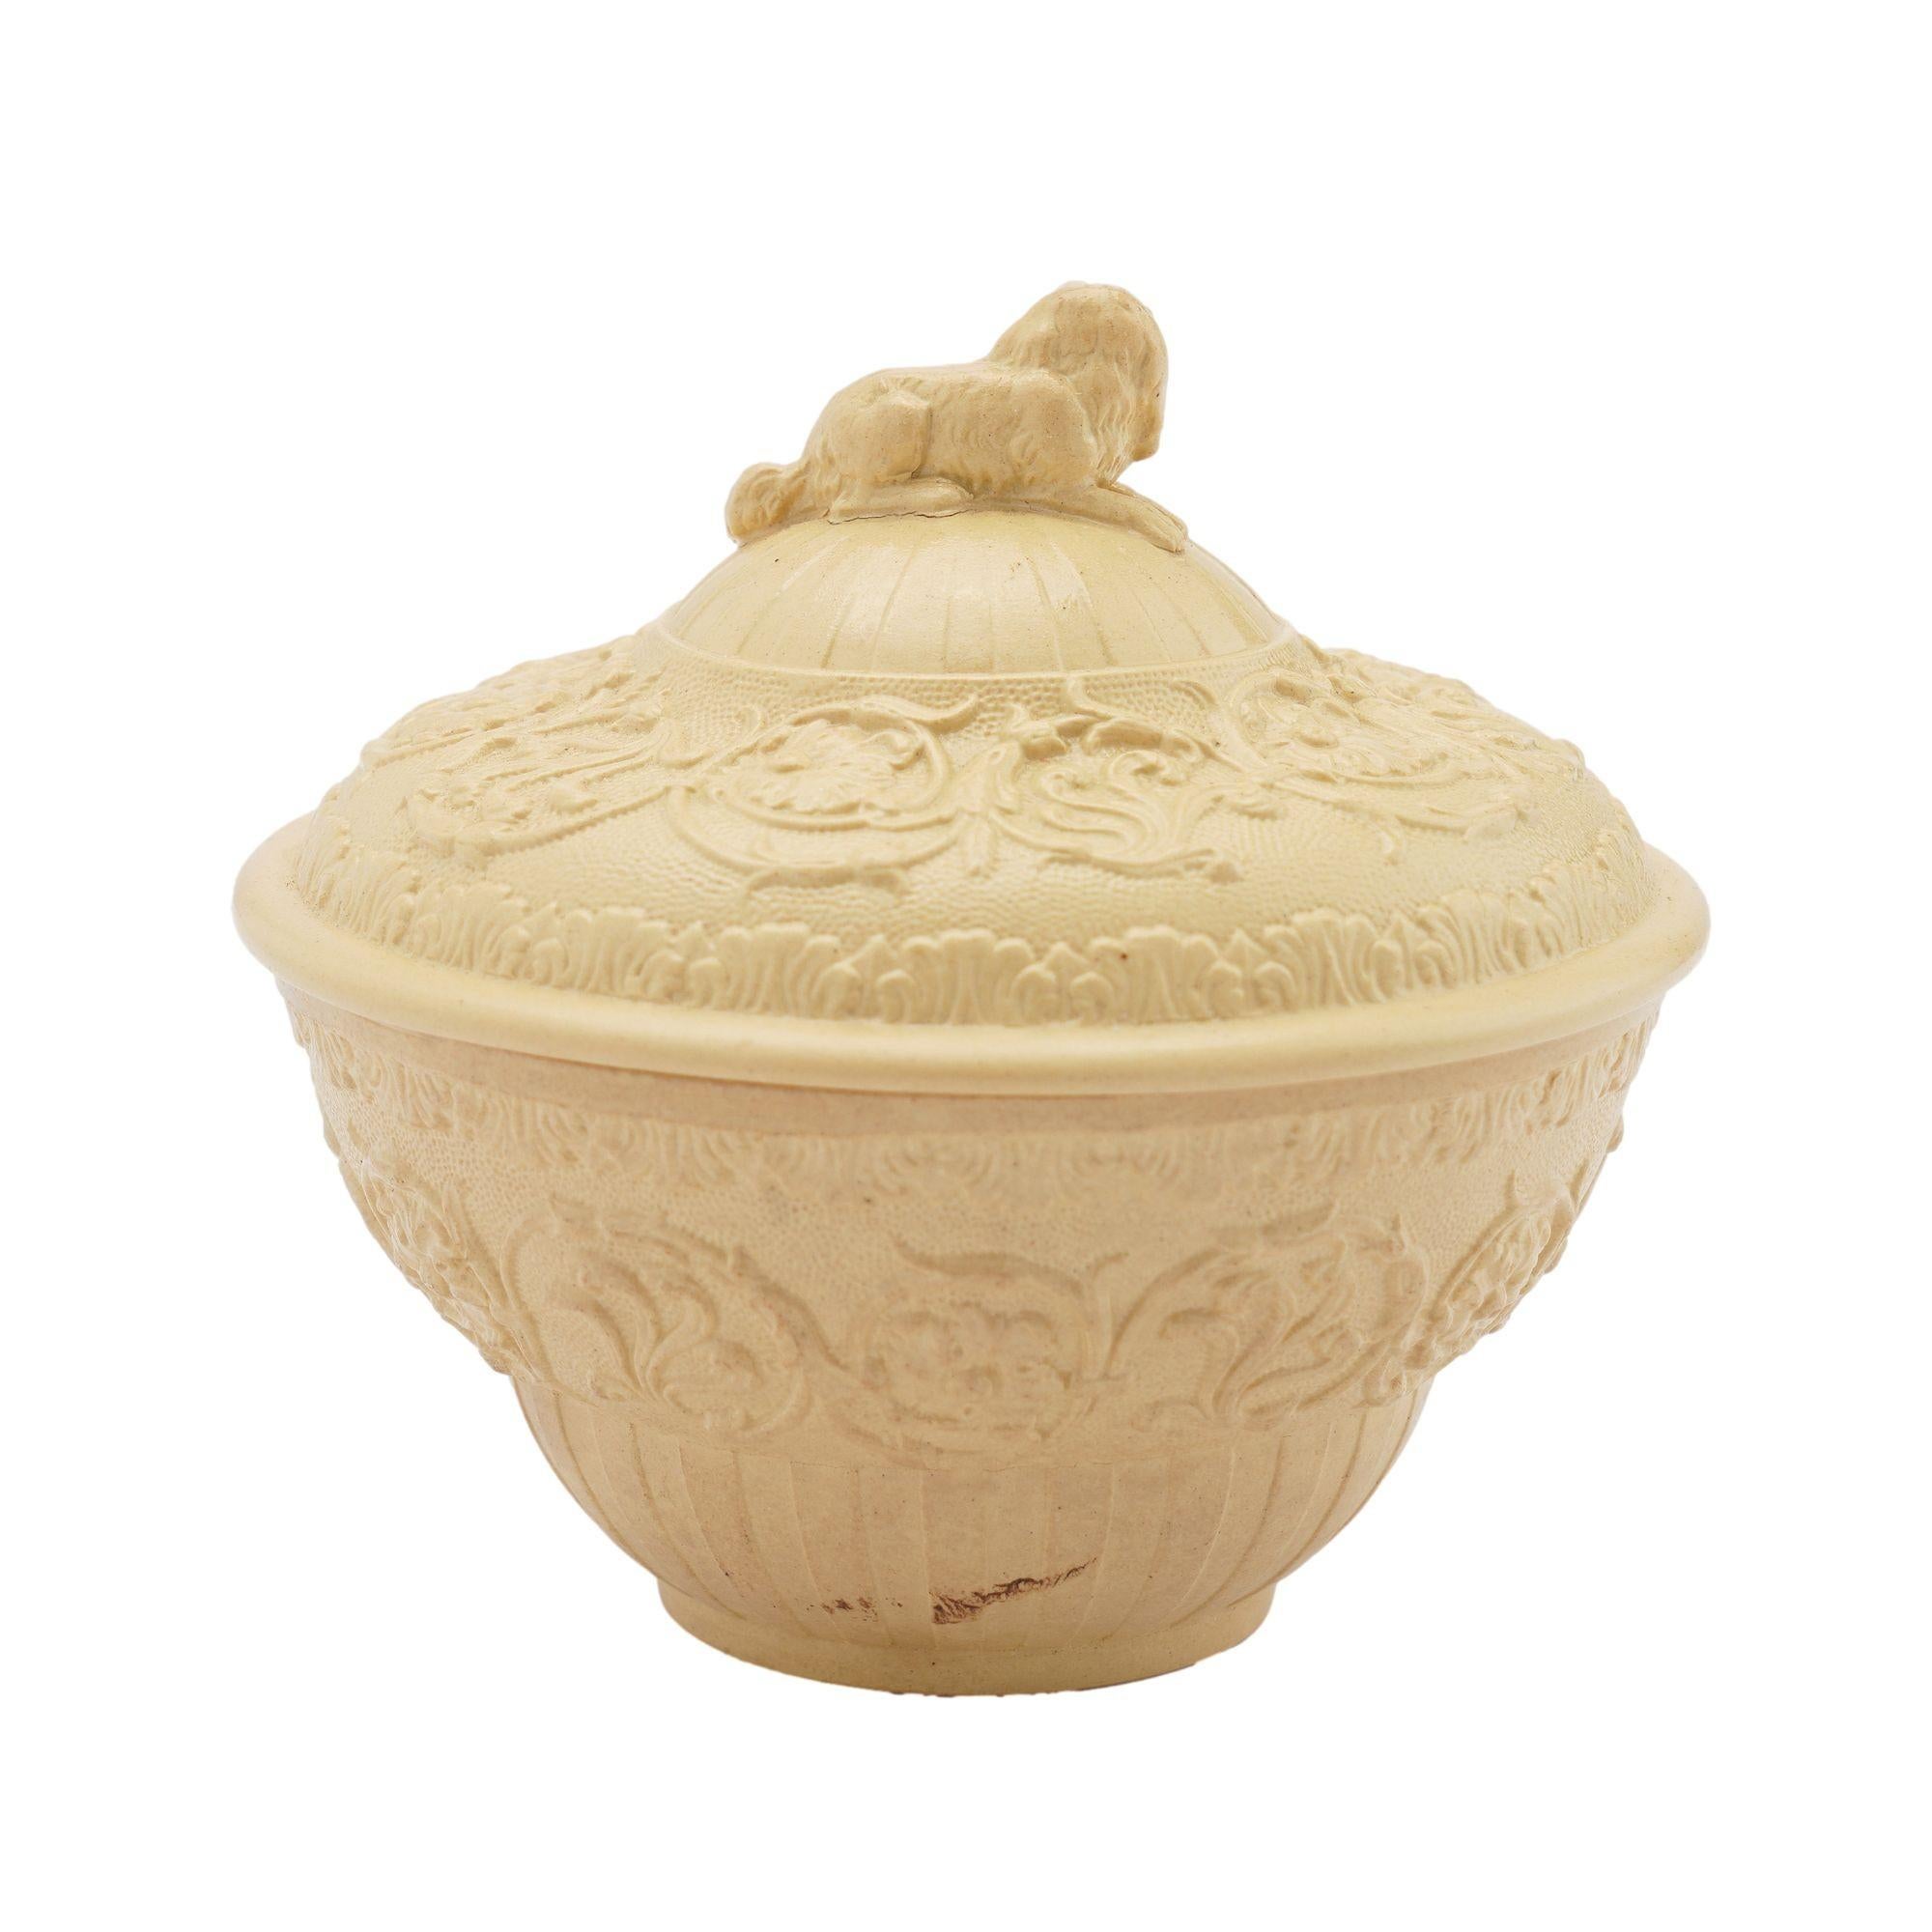 Wedgwood Caneware Zuckerdose aus Keramik, um 1815-20 (19. Jahrhundert) im Angebot